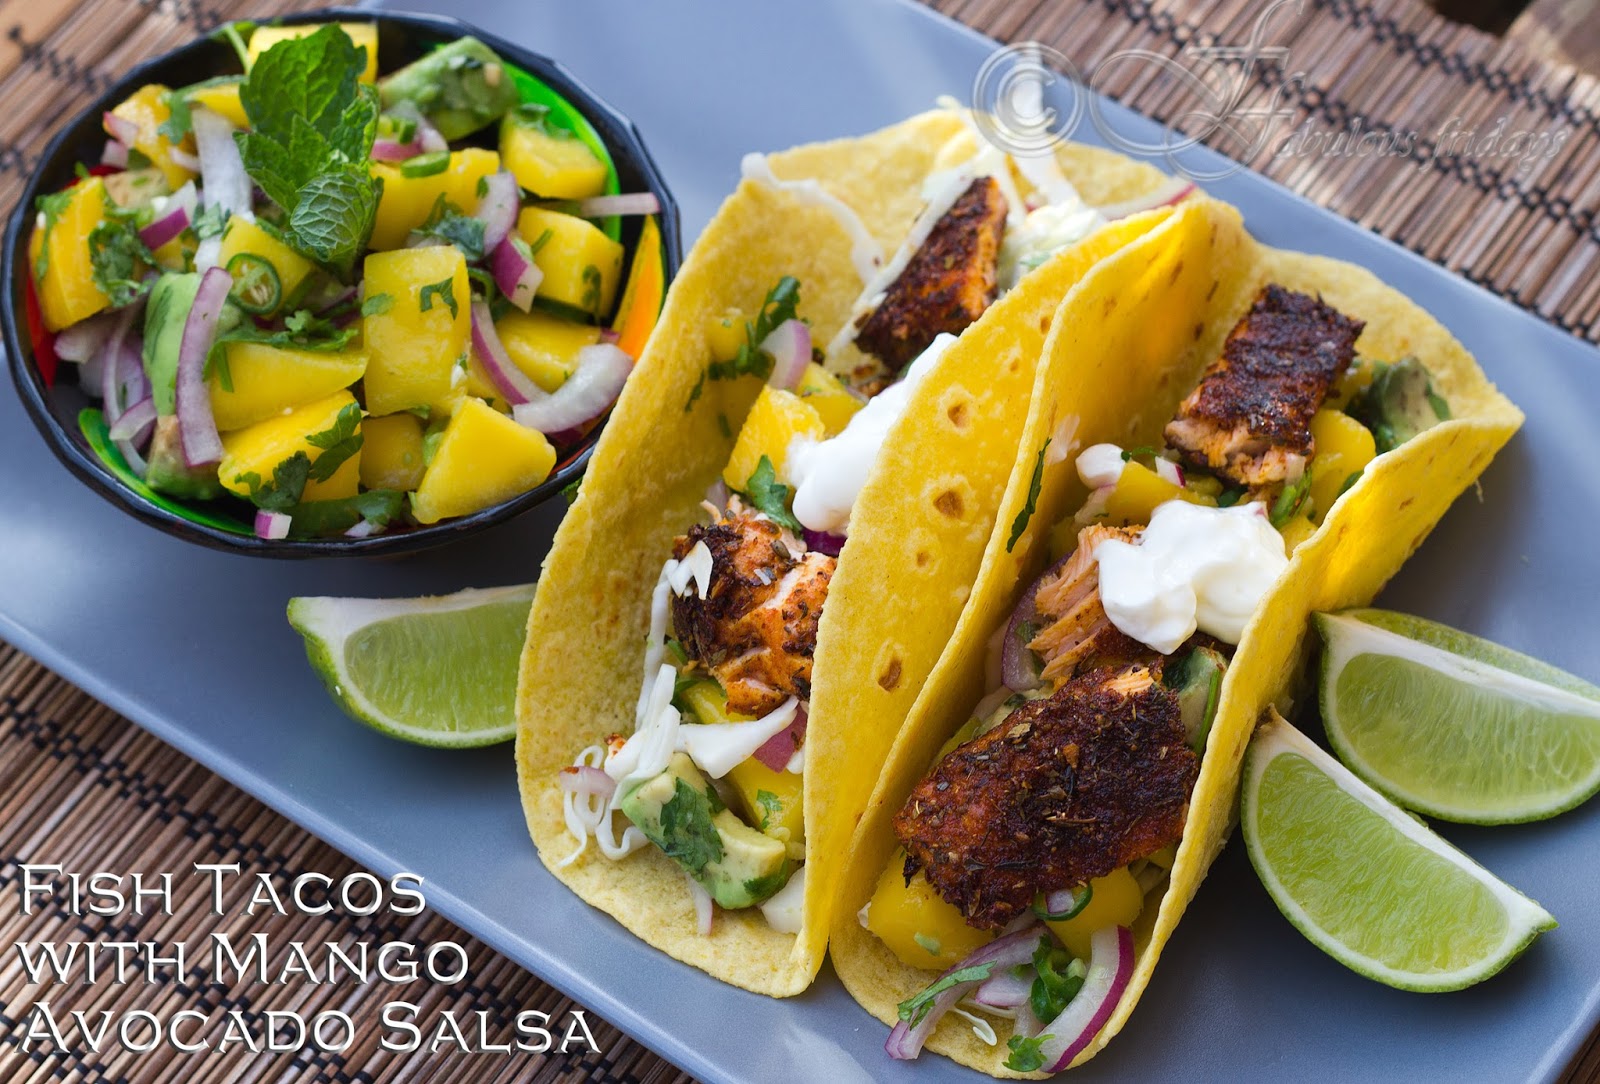 fabulous fridays: Fish tacos with mango avocado salsa